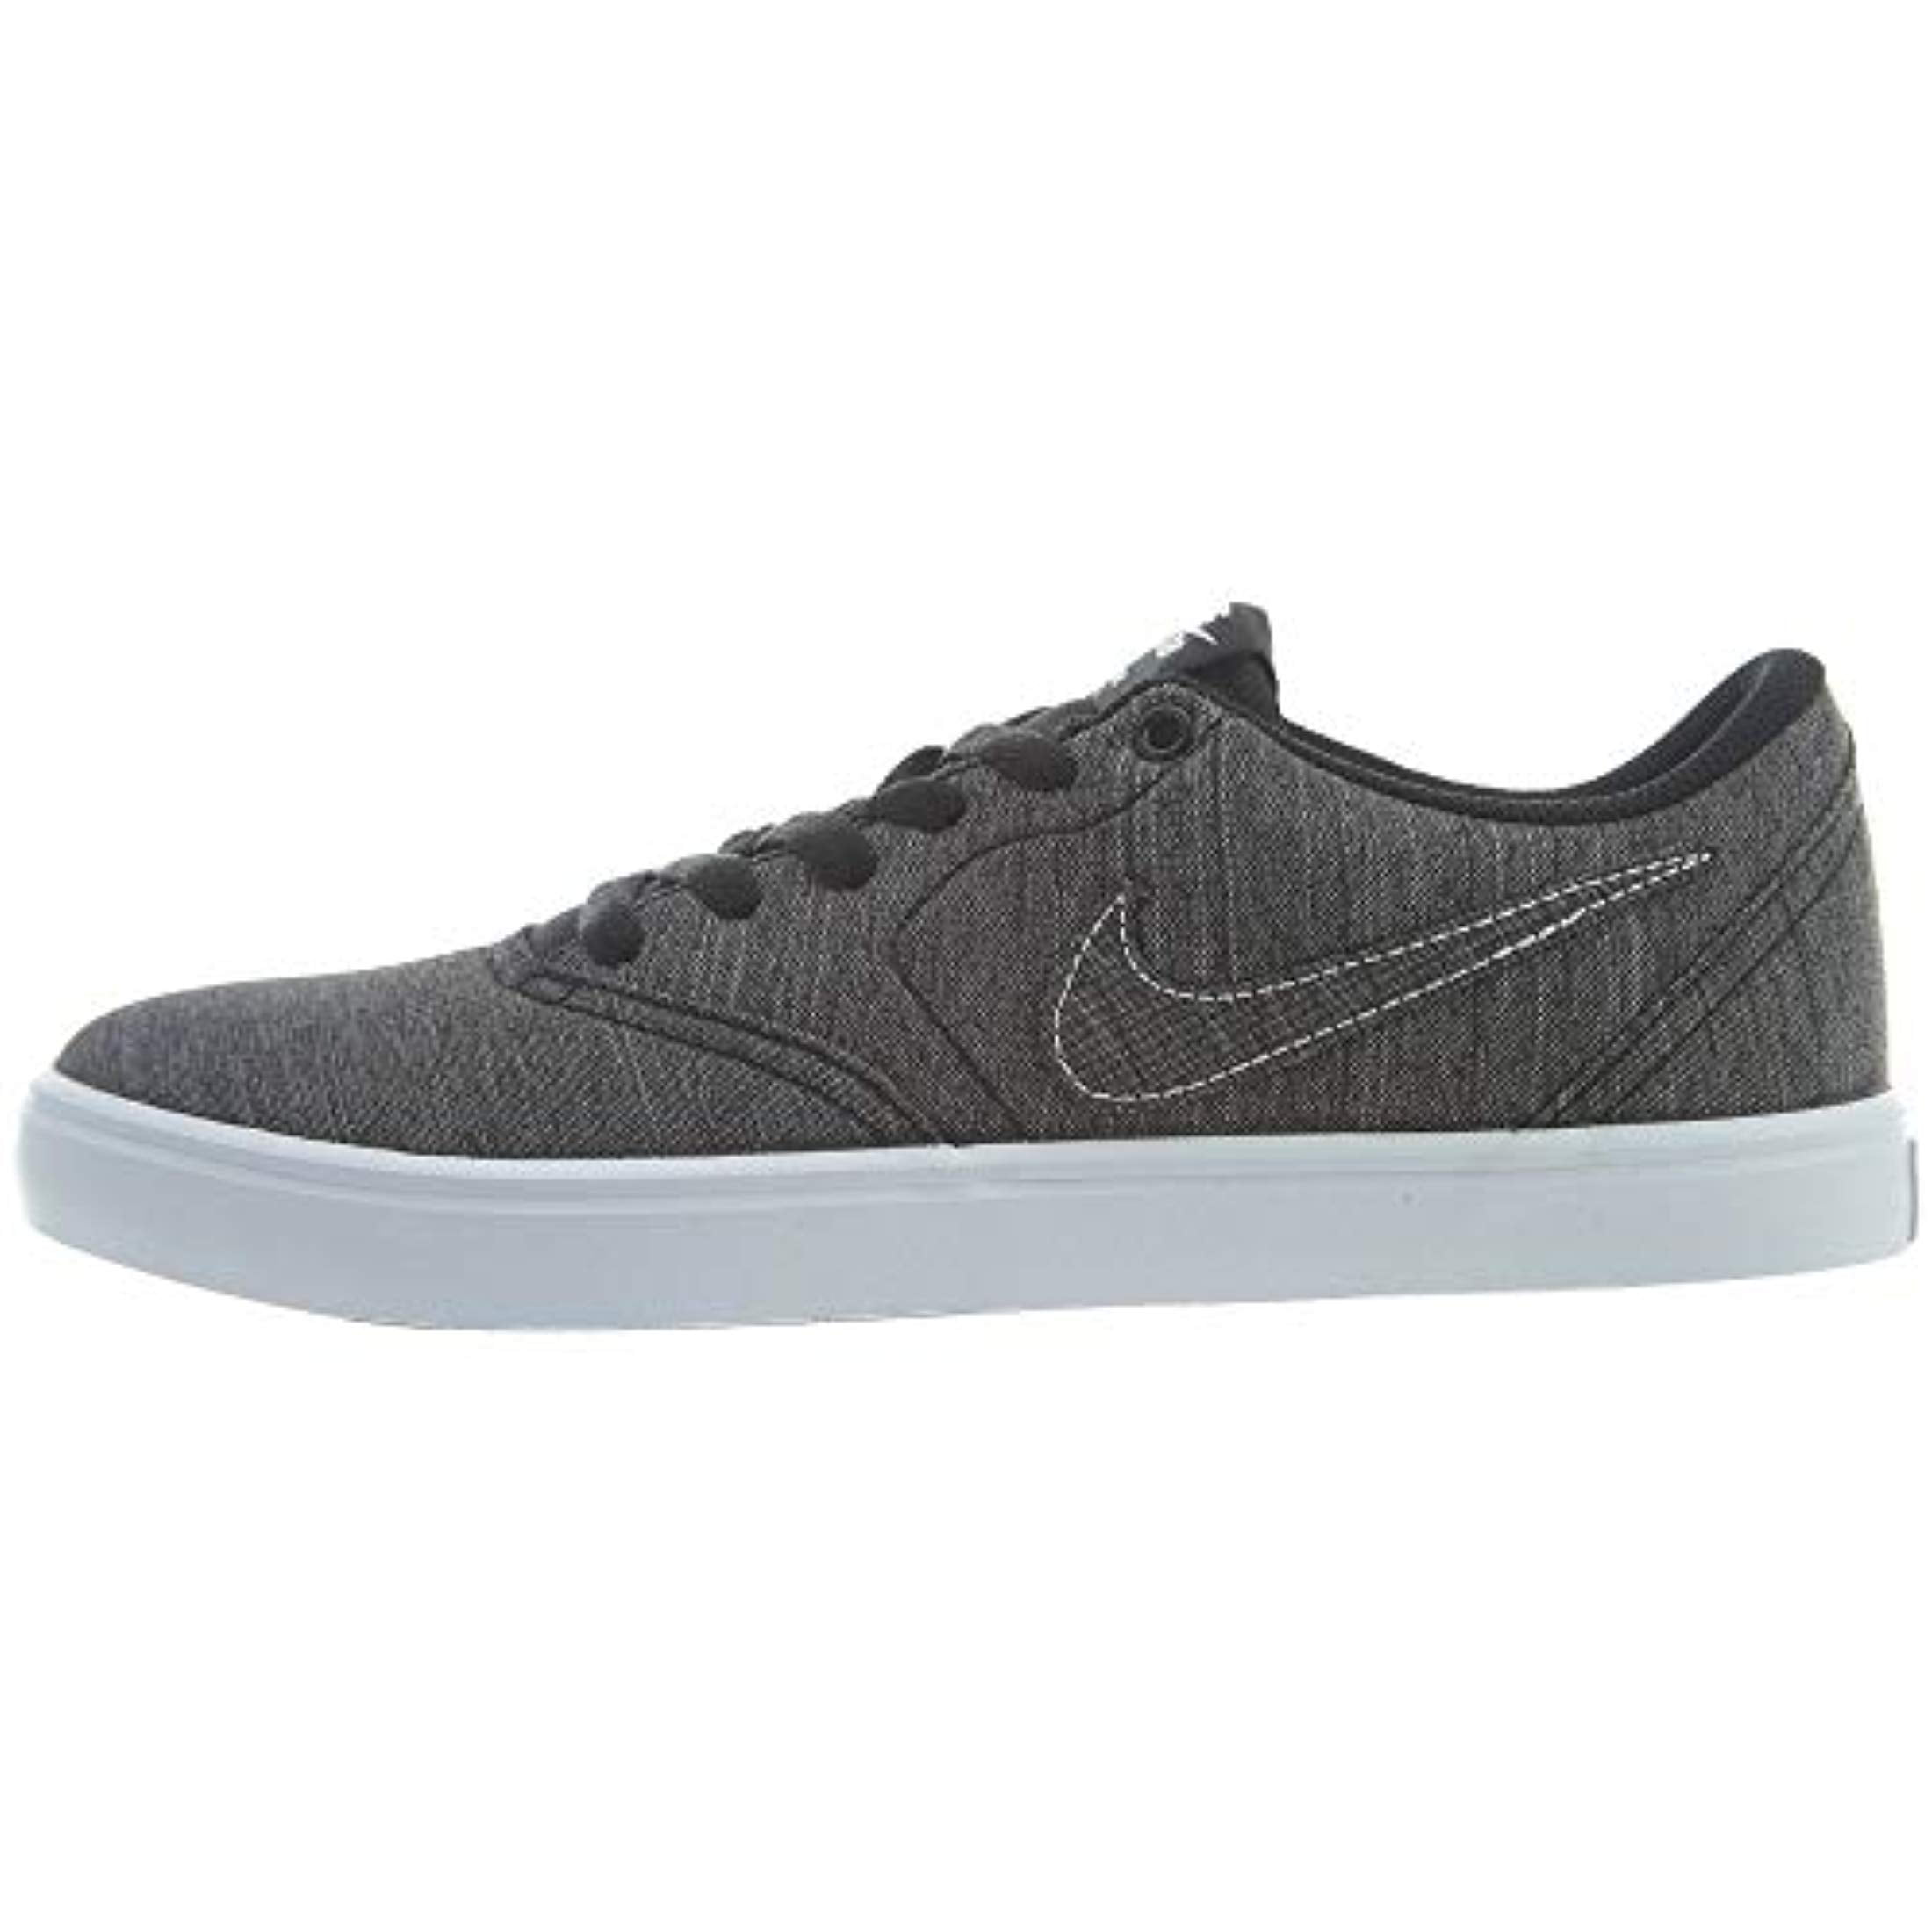 Nike SB Check Solarsoft Men's Skate Shoes Black/Black-White - Walmart.com